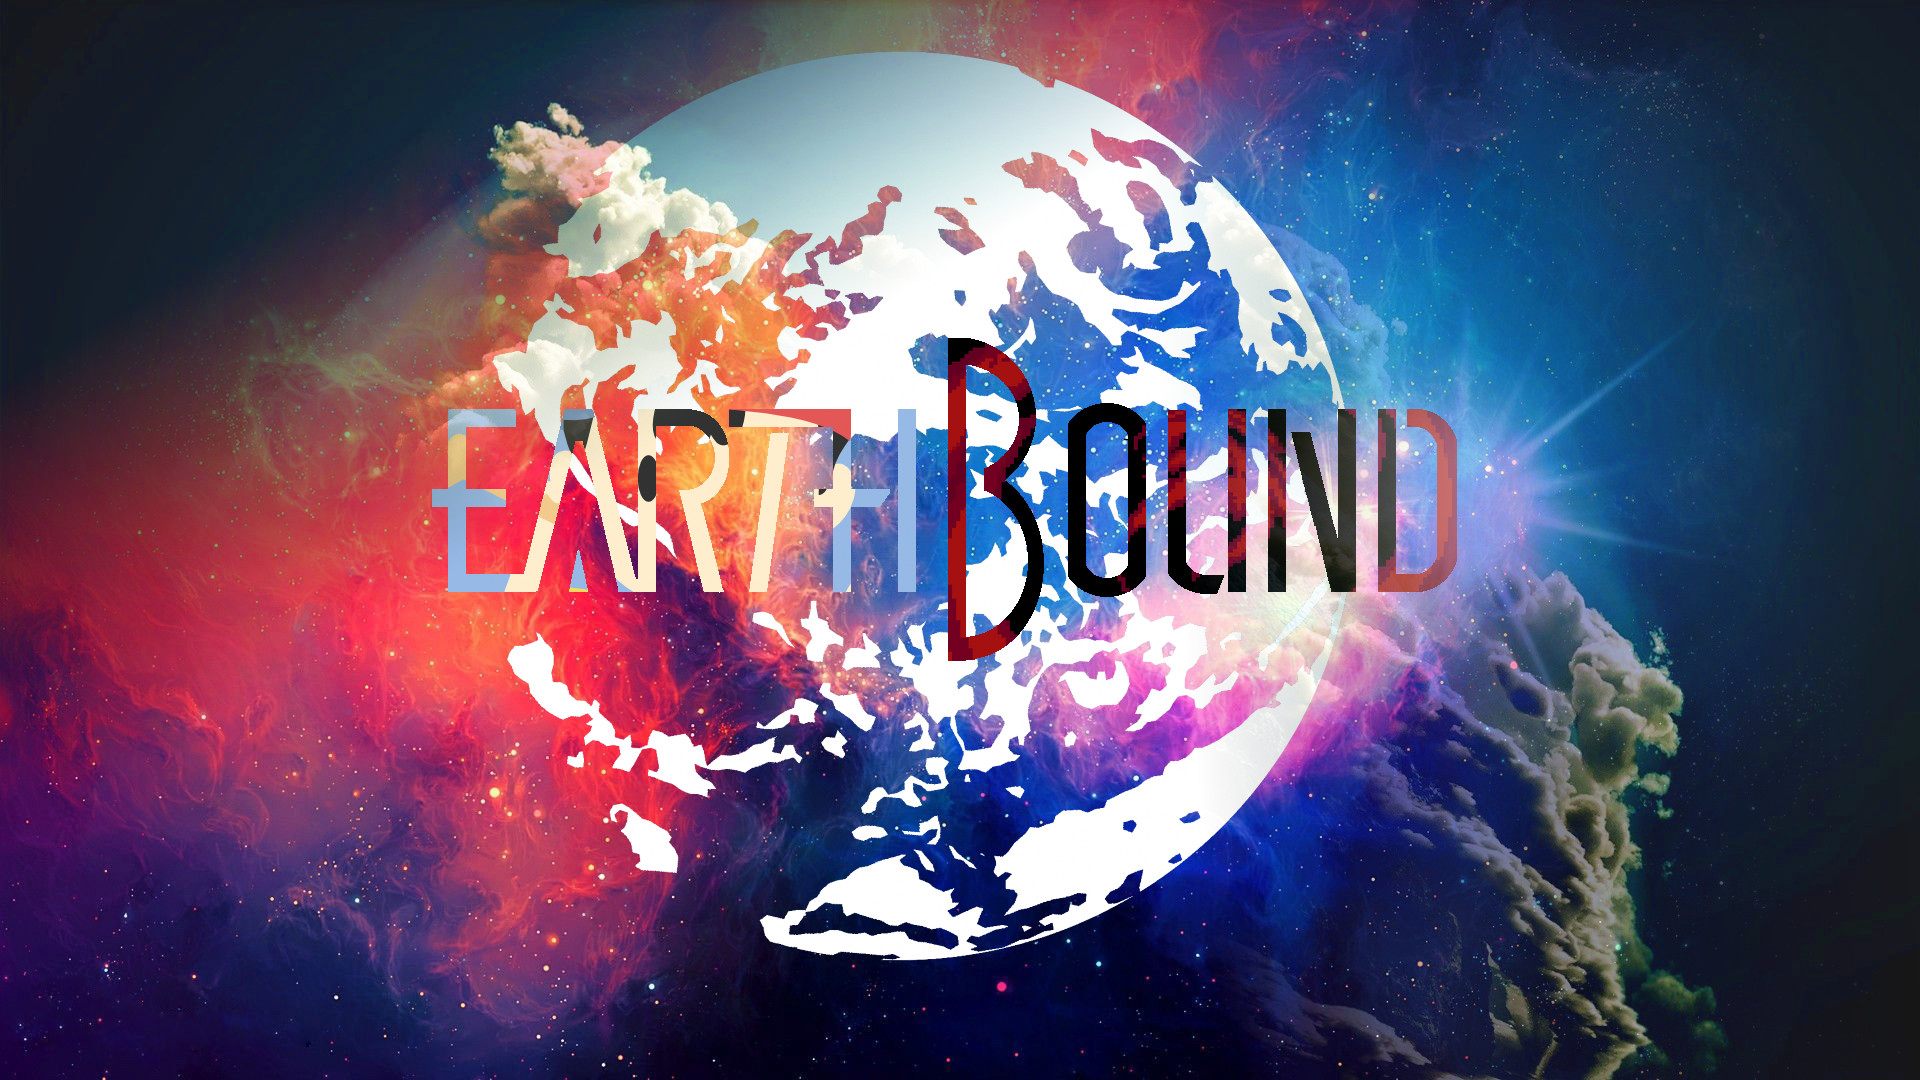 1920x1080 Earthbound Logo Wallpaper by Leepiin Earthbound Logo Wallpaper by Leepiin